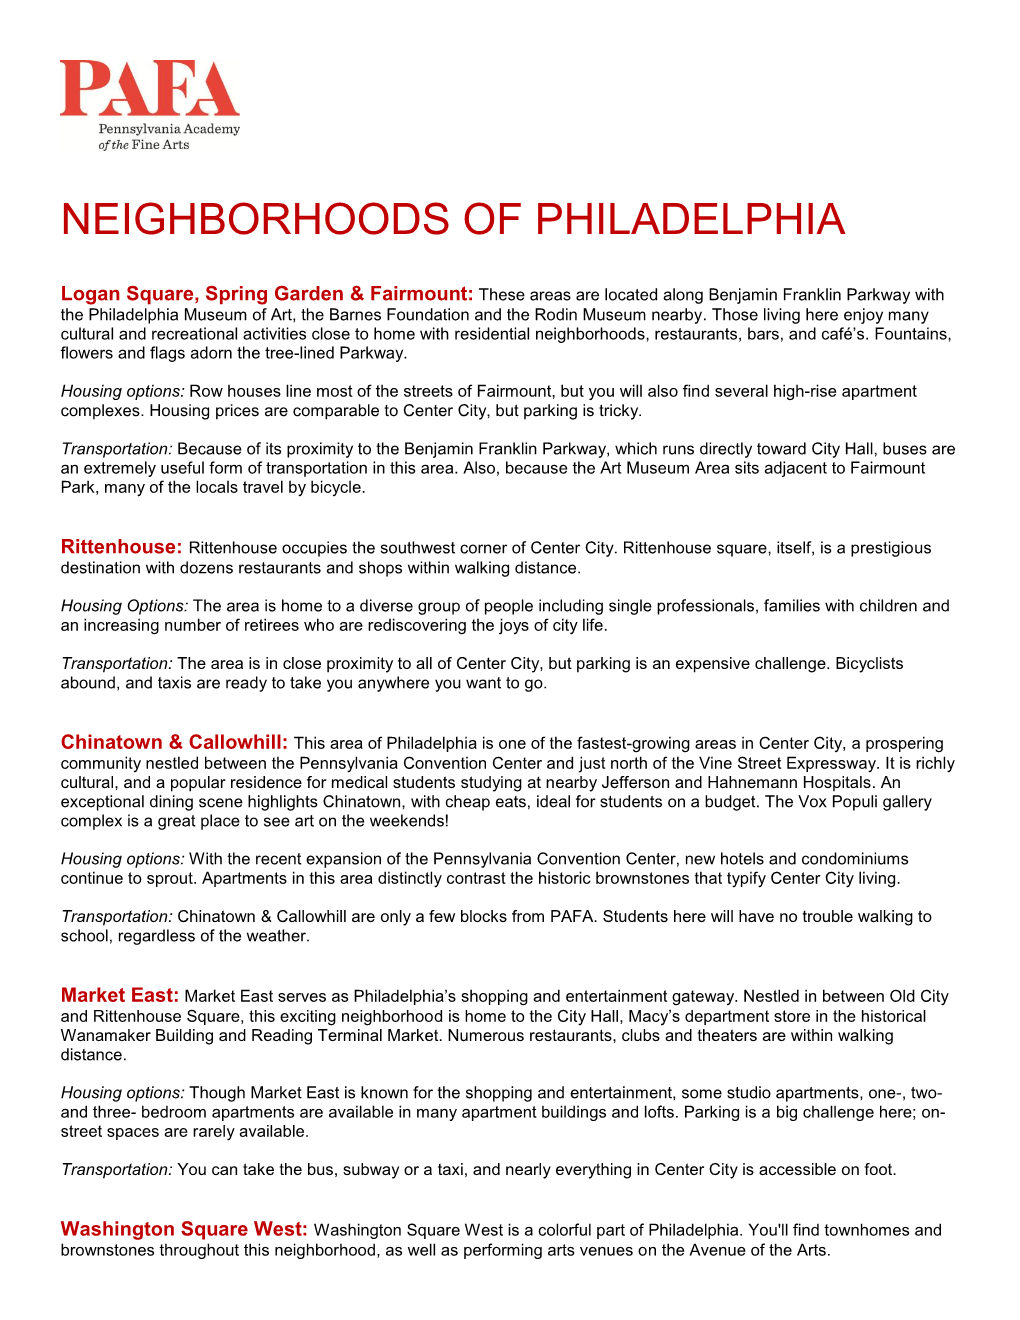 Neighborhoods in Philadelphia